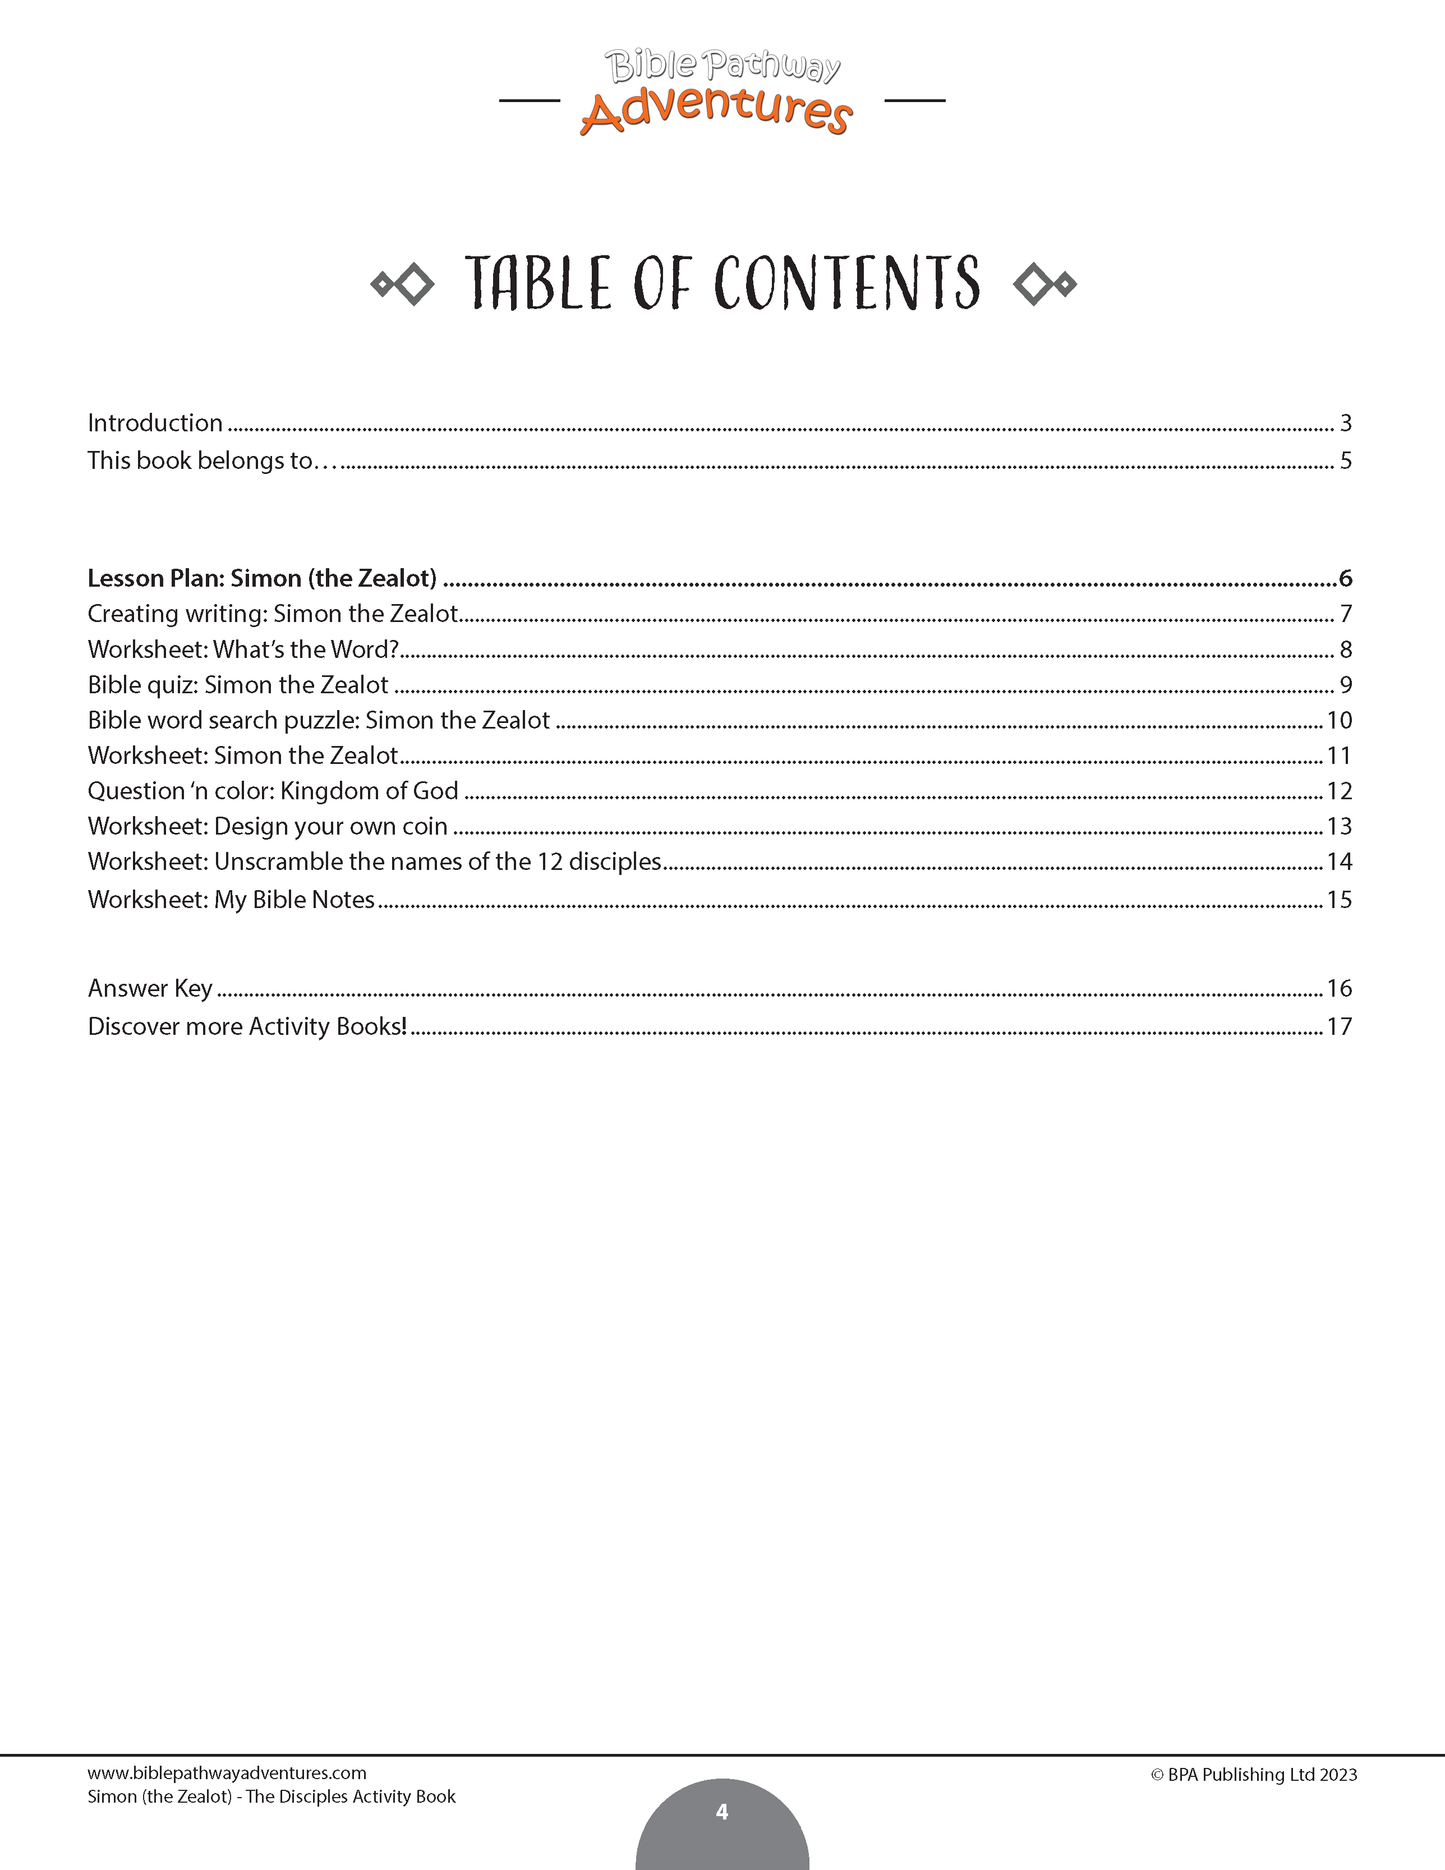 Simon: The Disciple Activity Book (PDF)